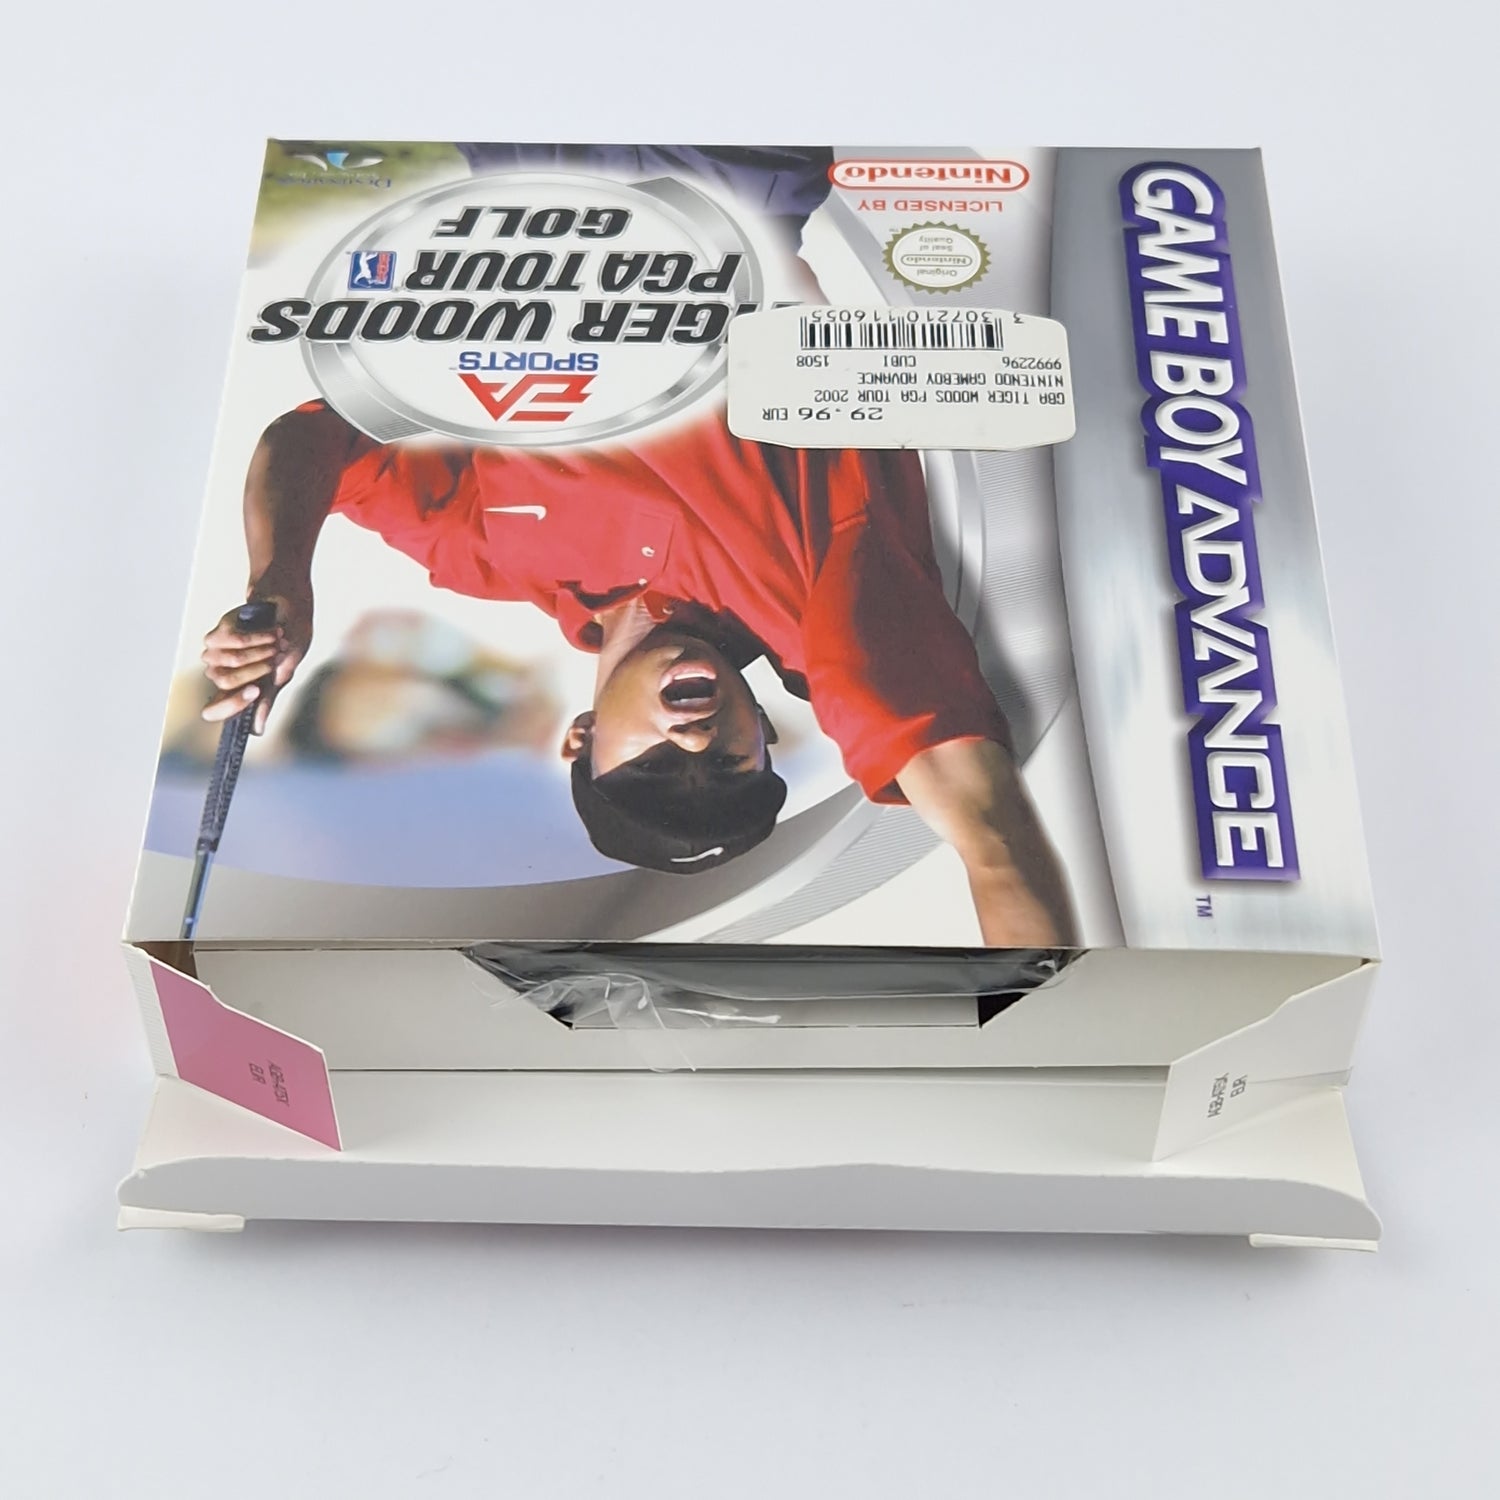 Nintendo Game Boy Advance Game: Tiger Woods PGA Tour Golf OVP Instructions Module